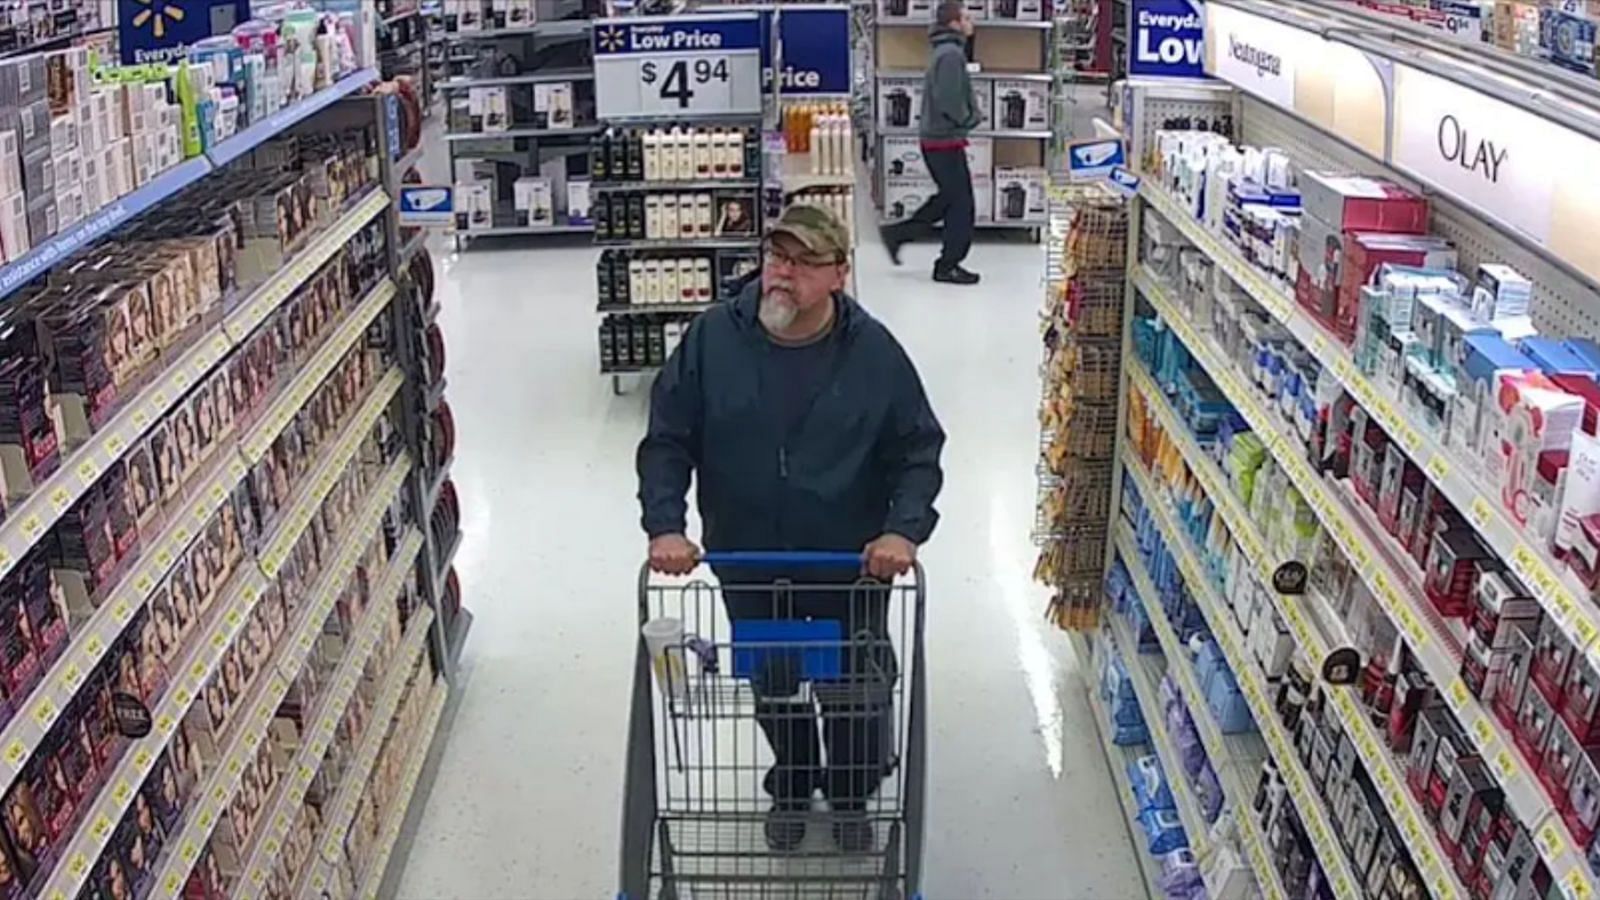 CCTV footage of Tad Cummins at Walmart (Image via Oxygen)